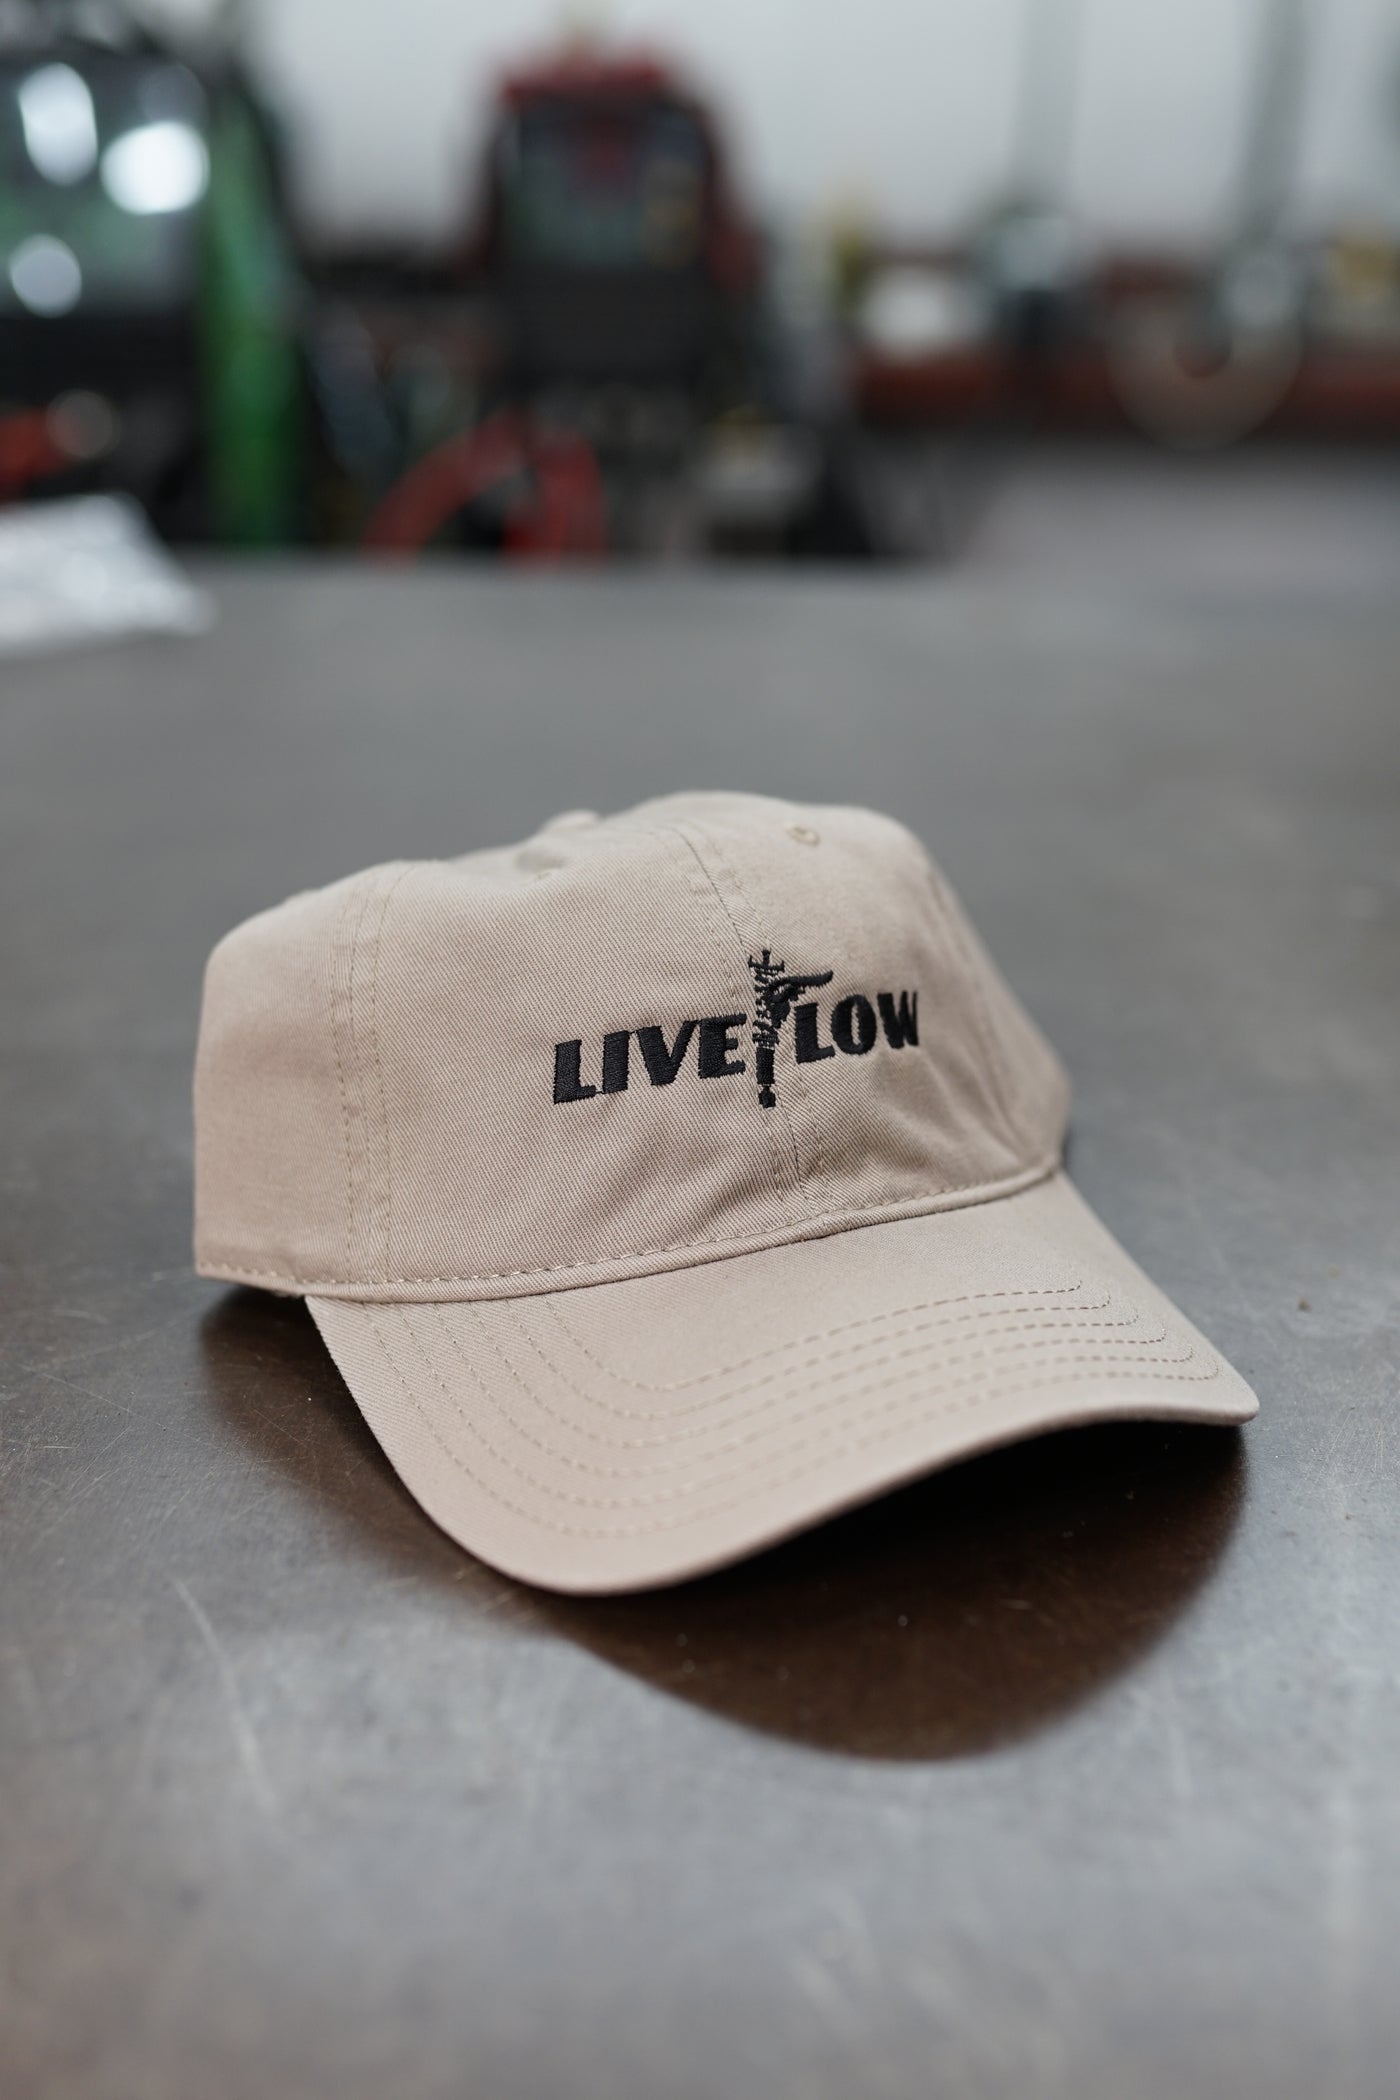 Live Low Winged Hat - Tan / Black